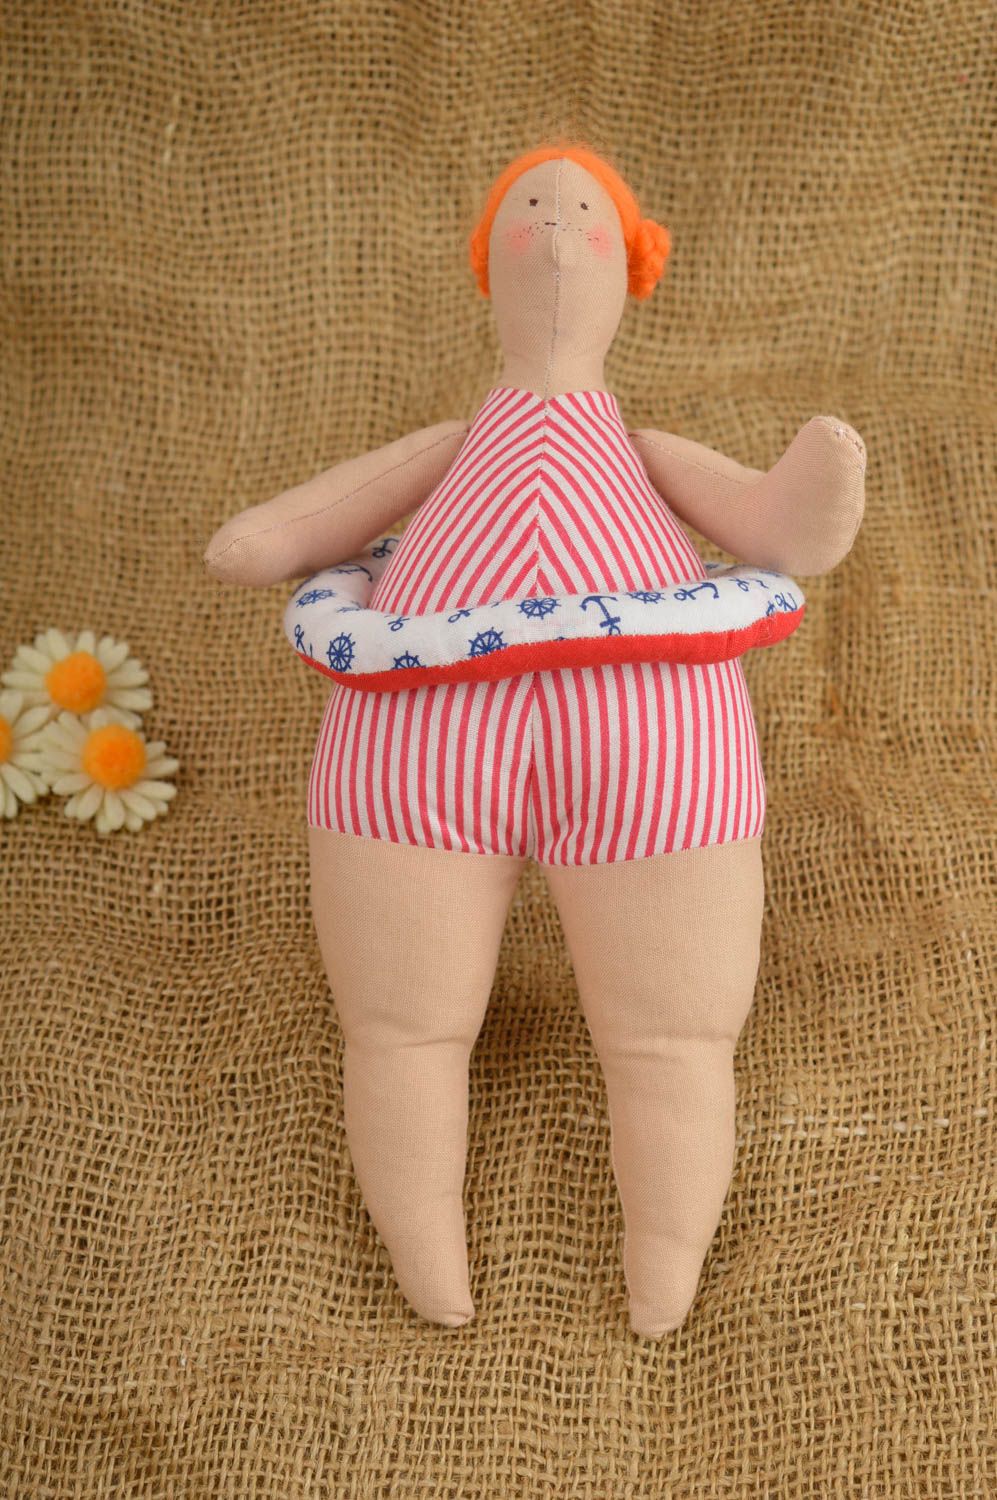 Handmade toy unusual toy for girls gift ideas nursery decor soft doll photo 1